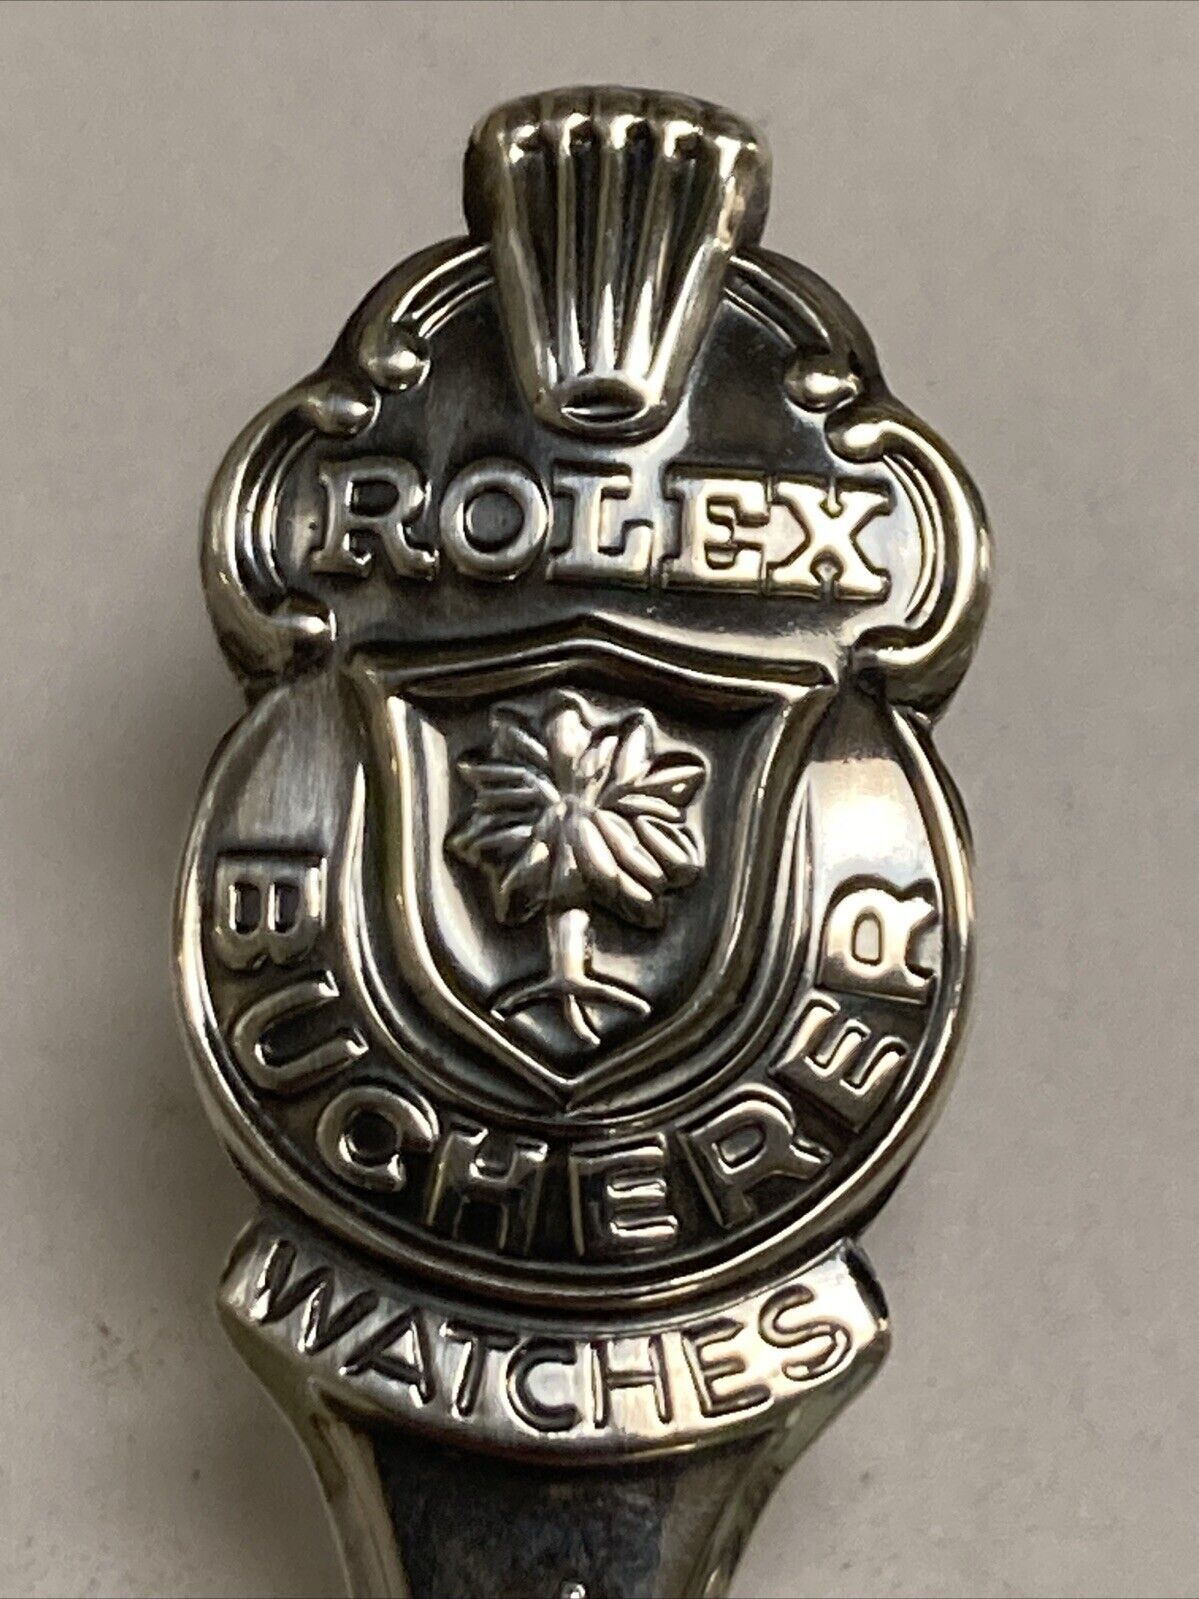 Basel  Rolex Bucherer Watches CB 6.9 Vintage Souvenir Spoon Collectible